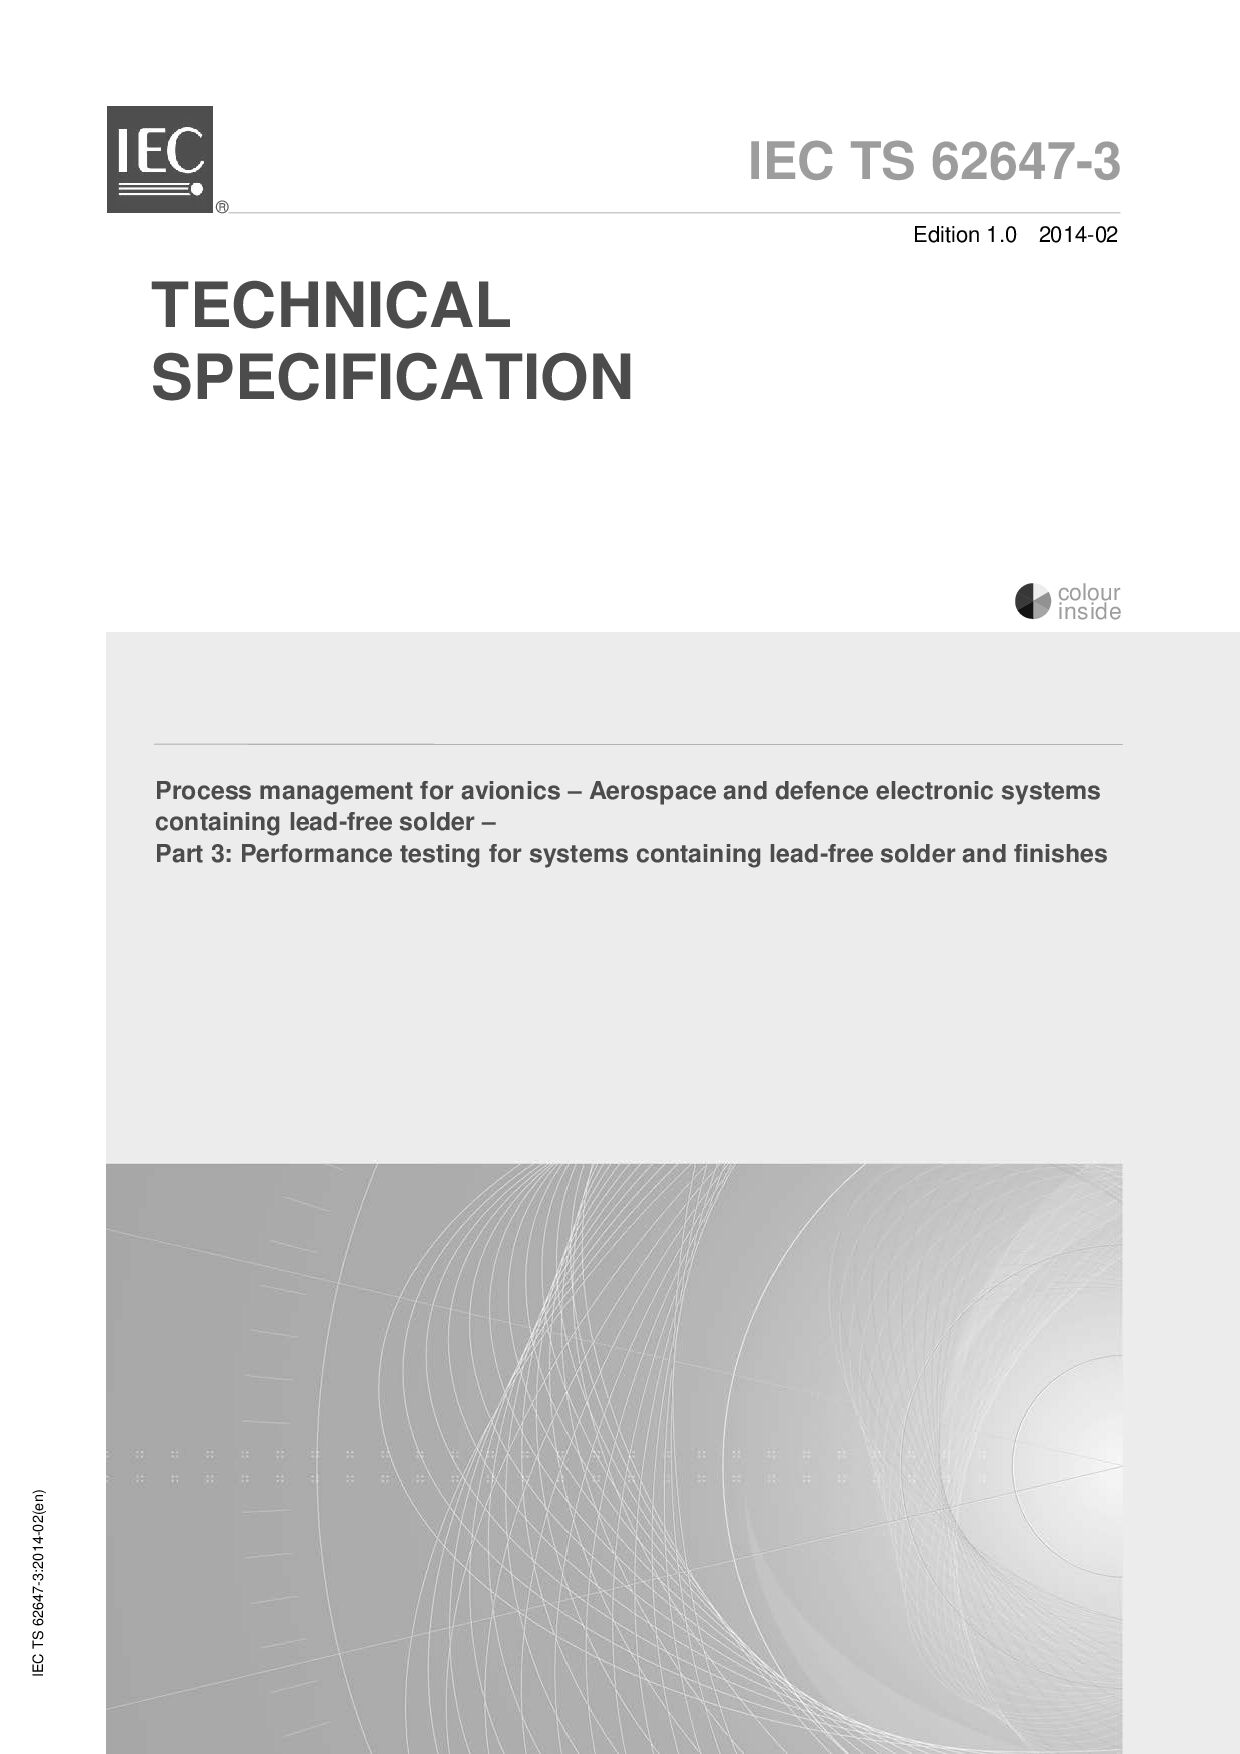 IEC TS 62647-3:2014封面图